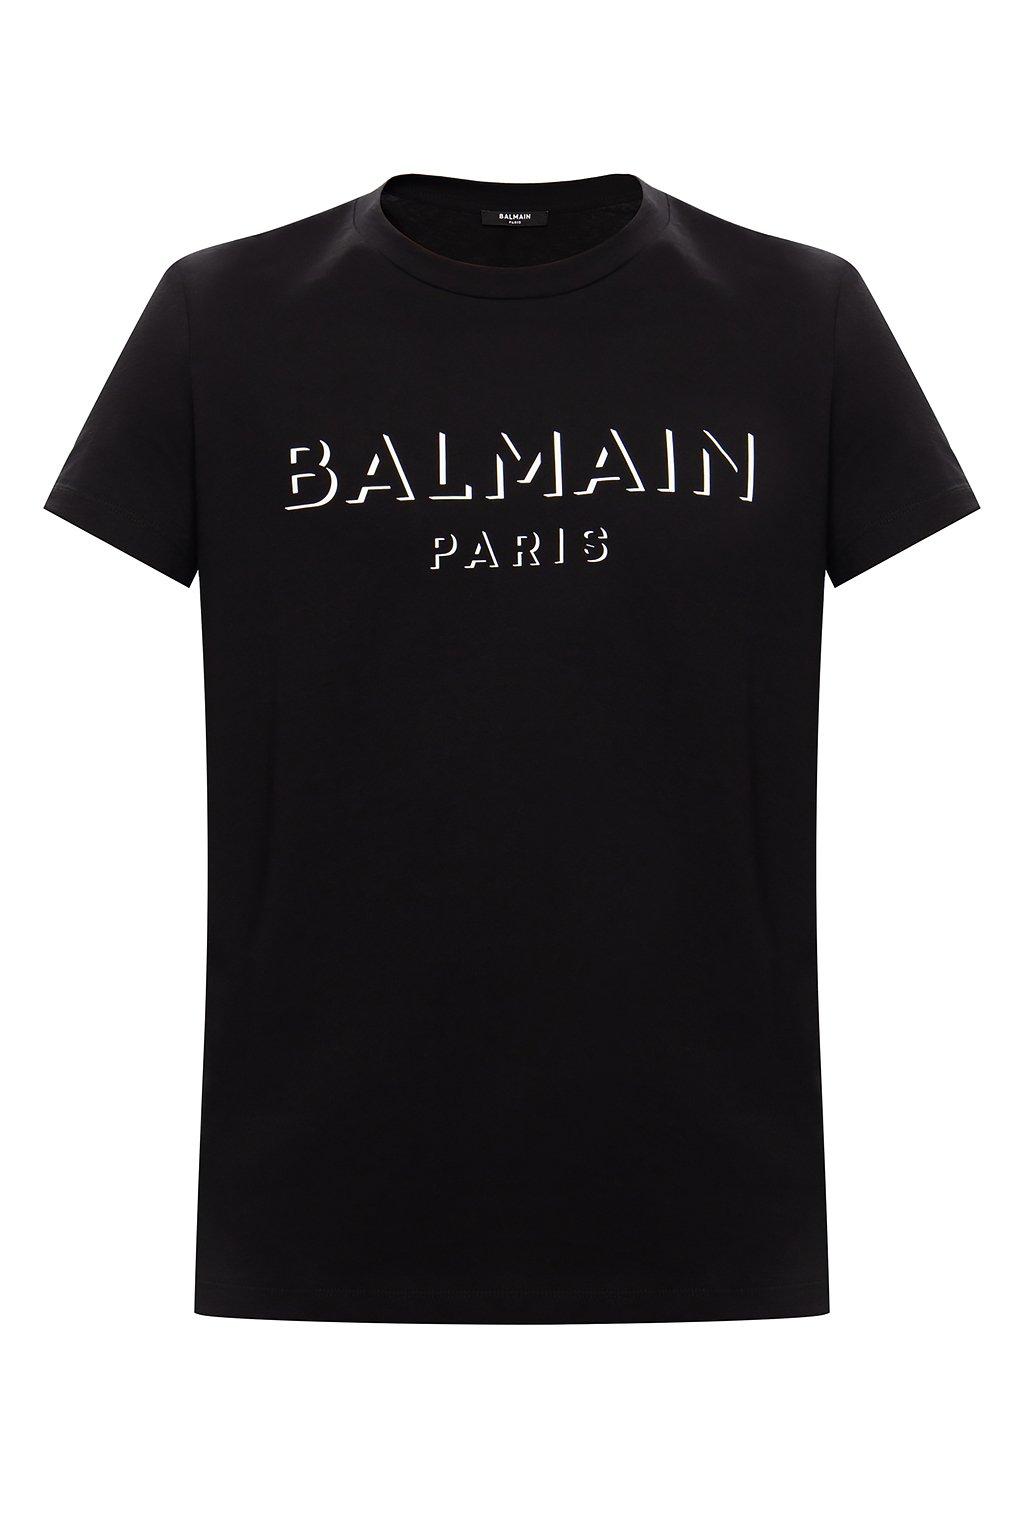 Balmain Cotton Logo T-shirt in Black for Men - Save 30% - Lyst